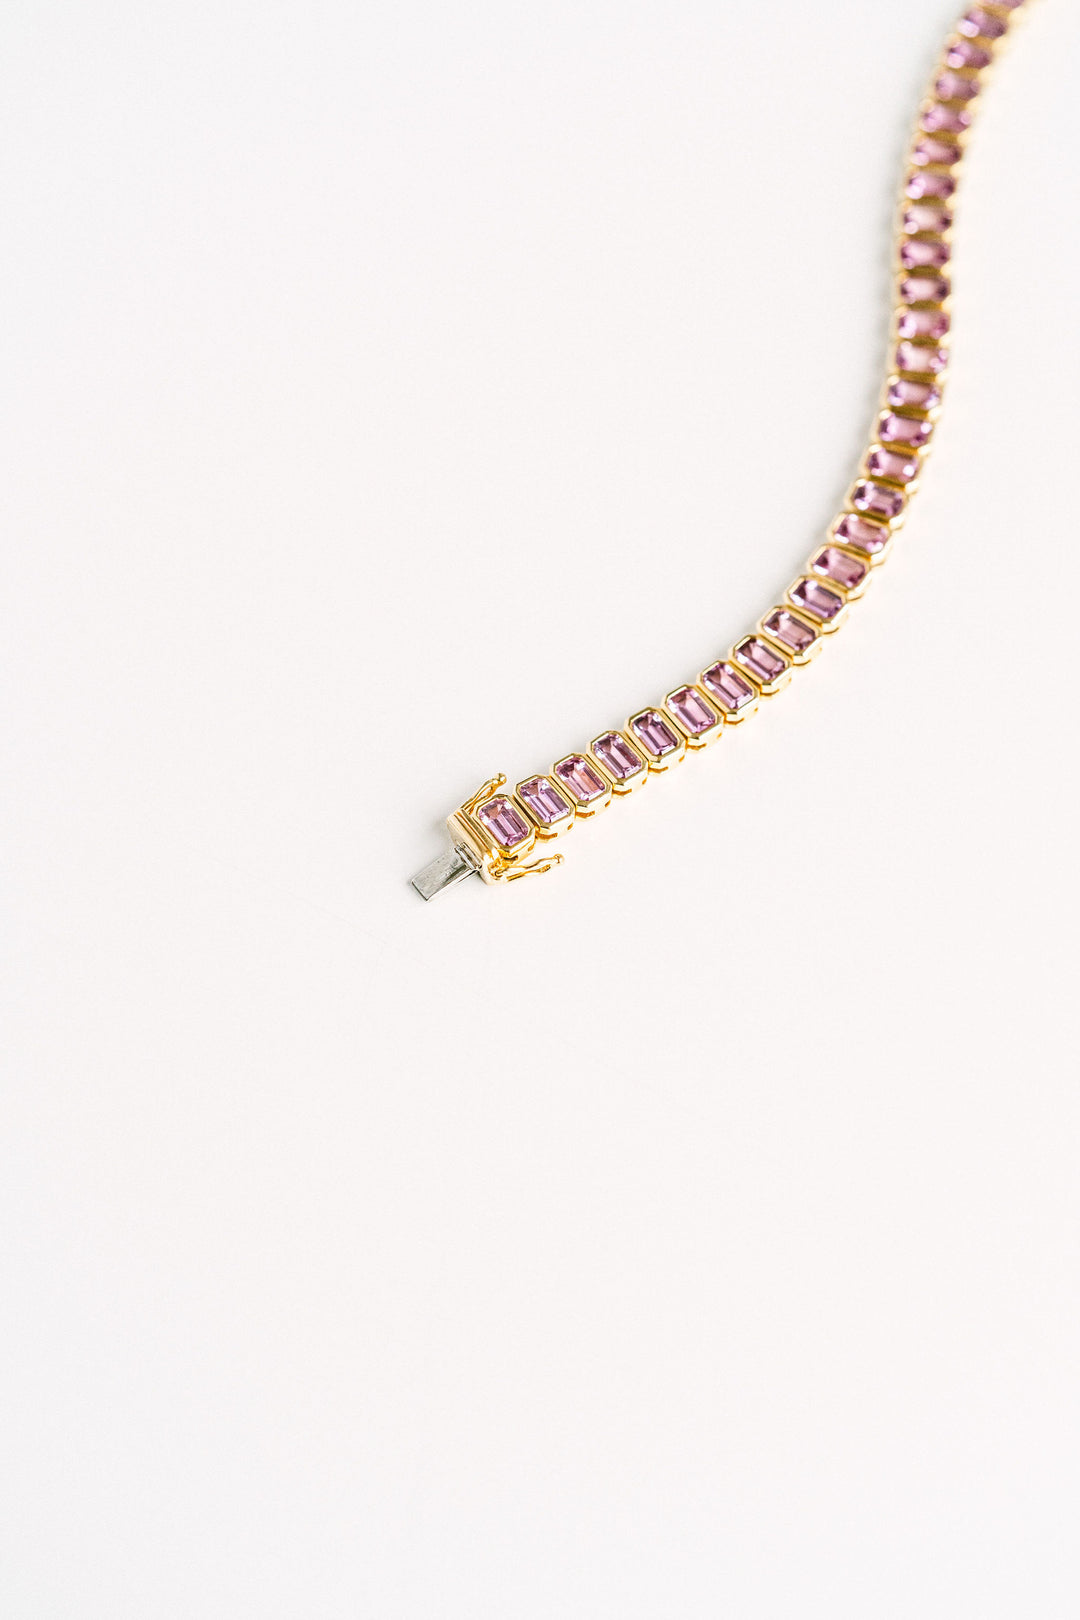 12.30ctw Emerald Cut Pink Sri Lankan Sapphire Bezel Tennis Bracelet, 14k Yellow Gold